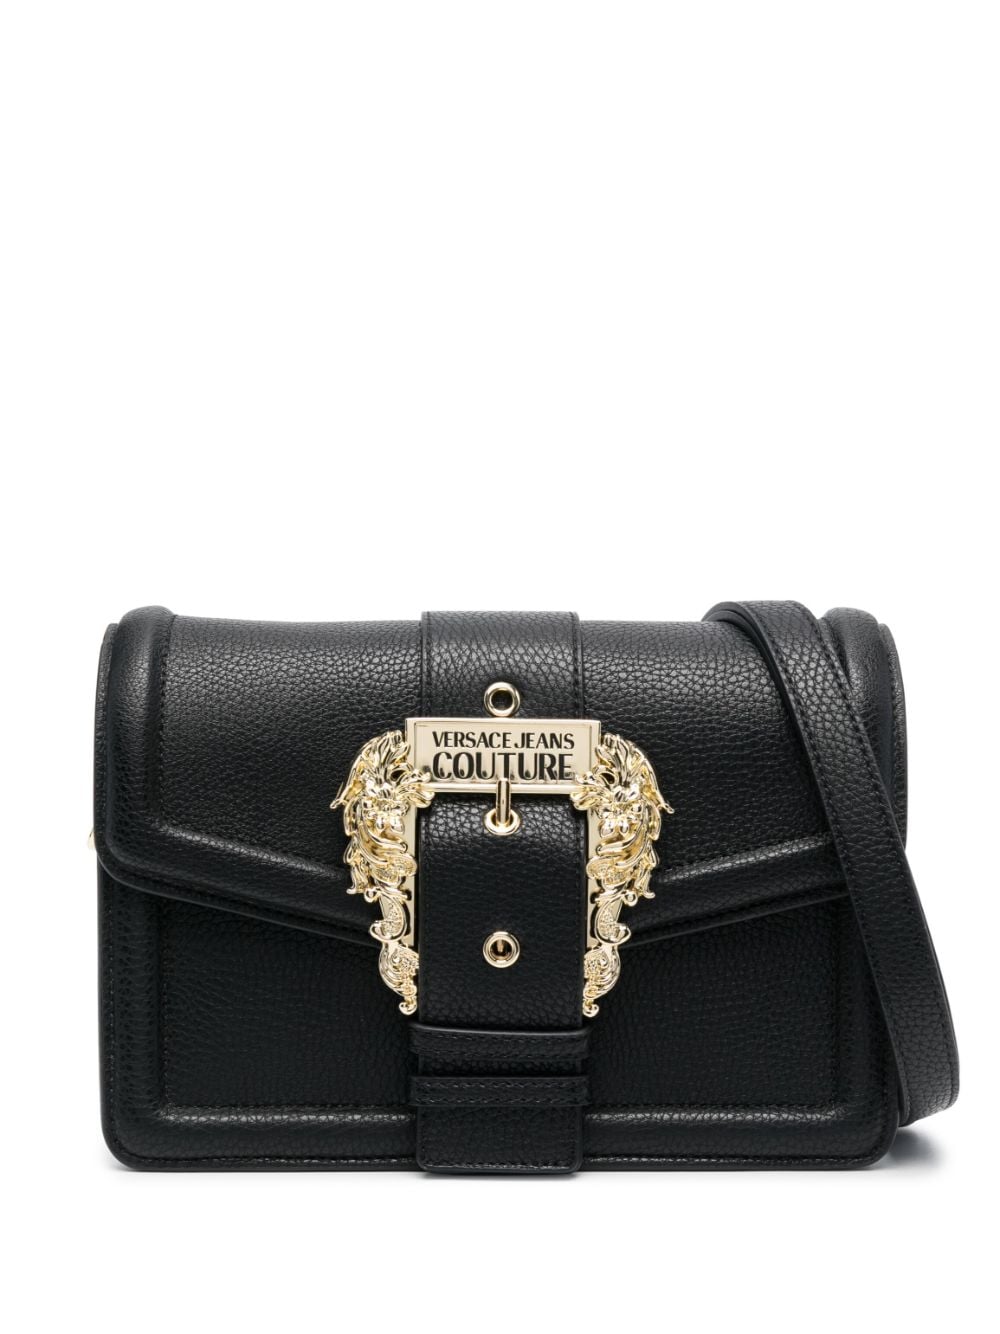 Versace Jeans Couture baroque-buckle satchel bag - Black von Versace Jeans Couture